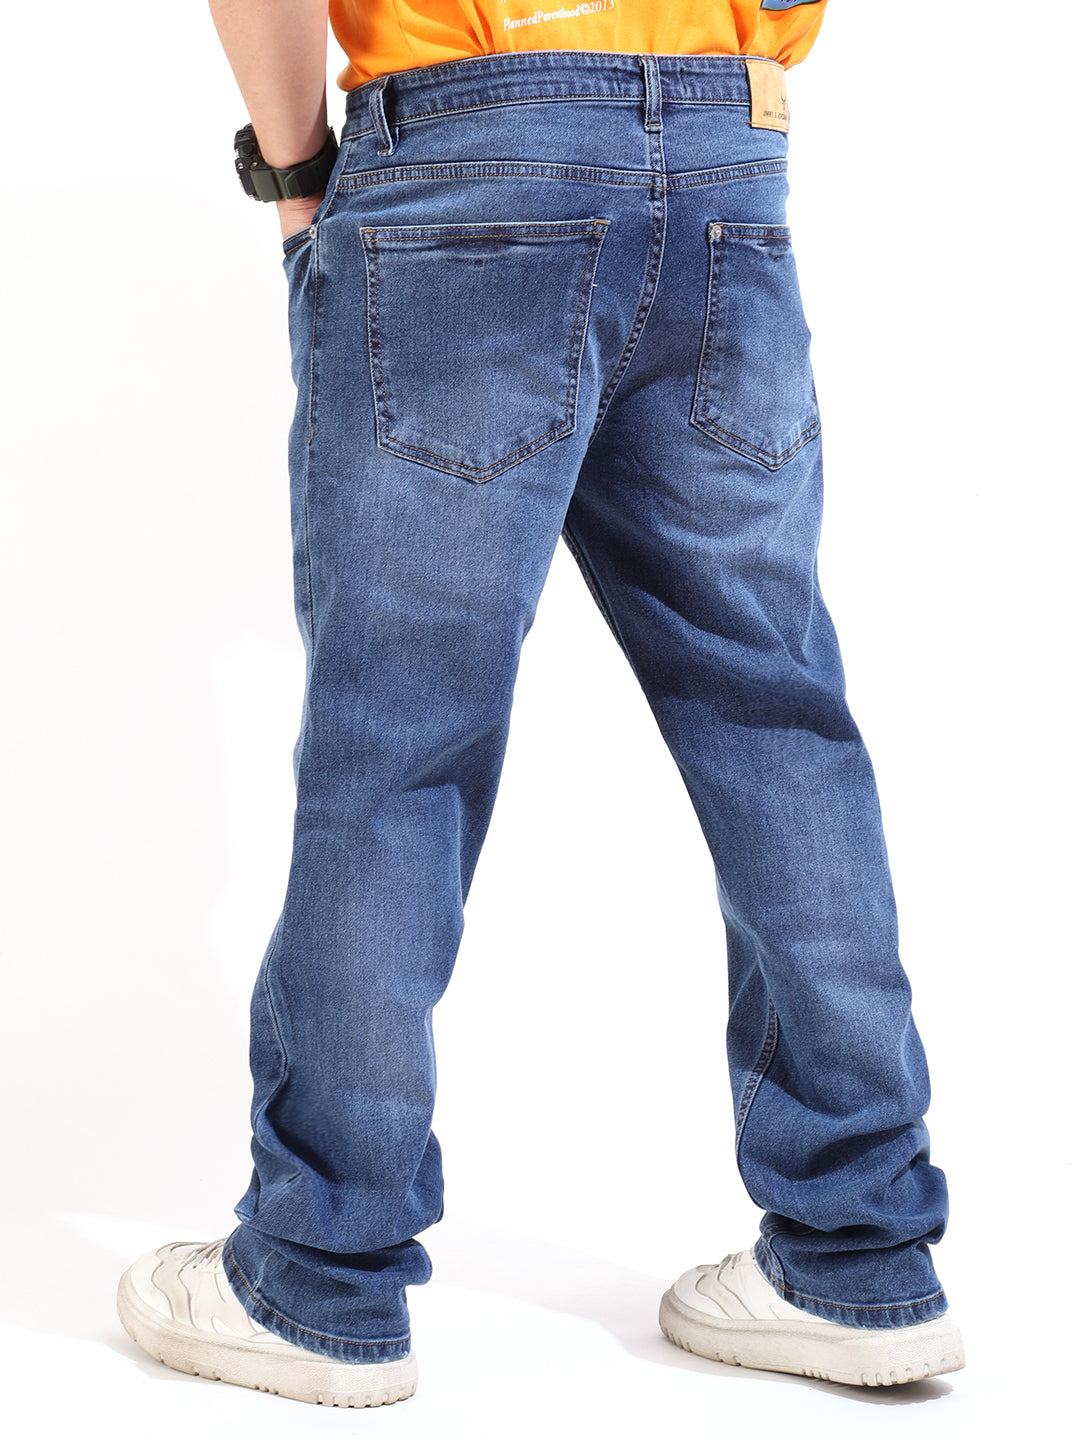 FOX JEANS Men's Carter Relaxed Fit Straight Blue Denim Jeans Size 32-44 |  eBay